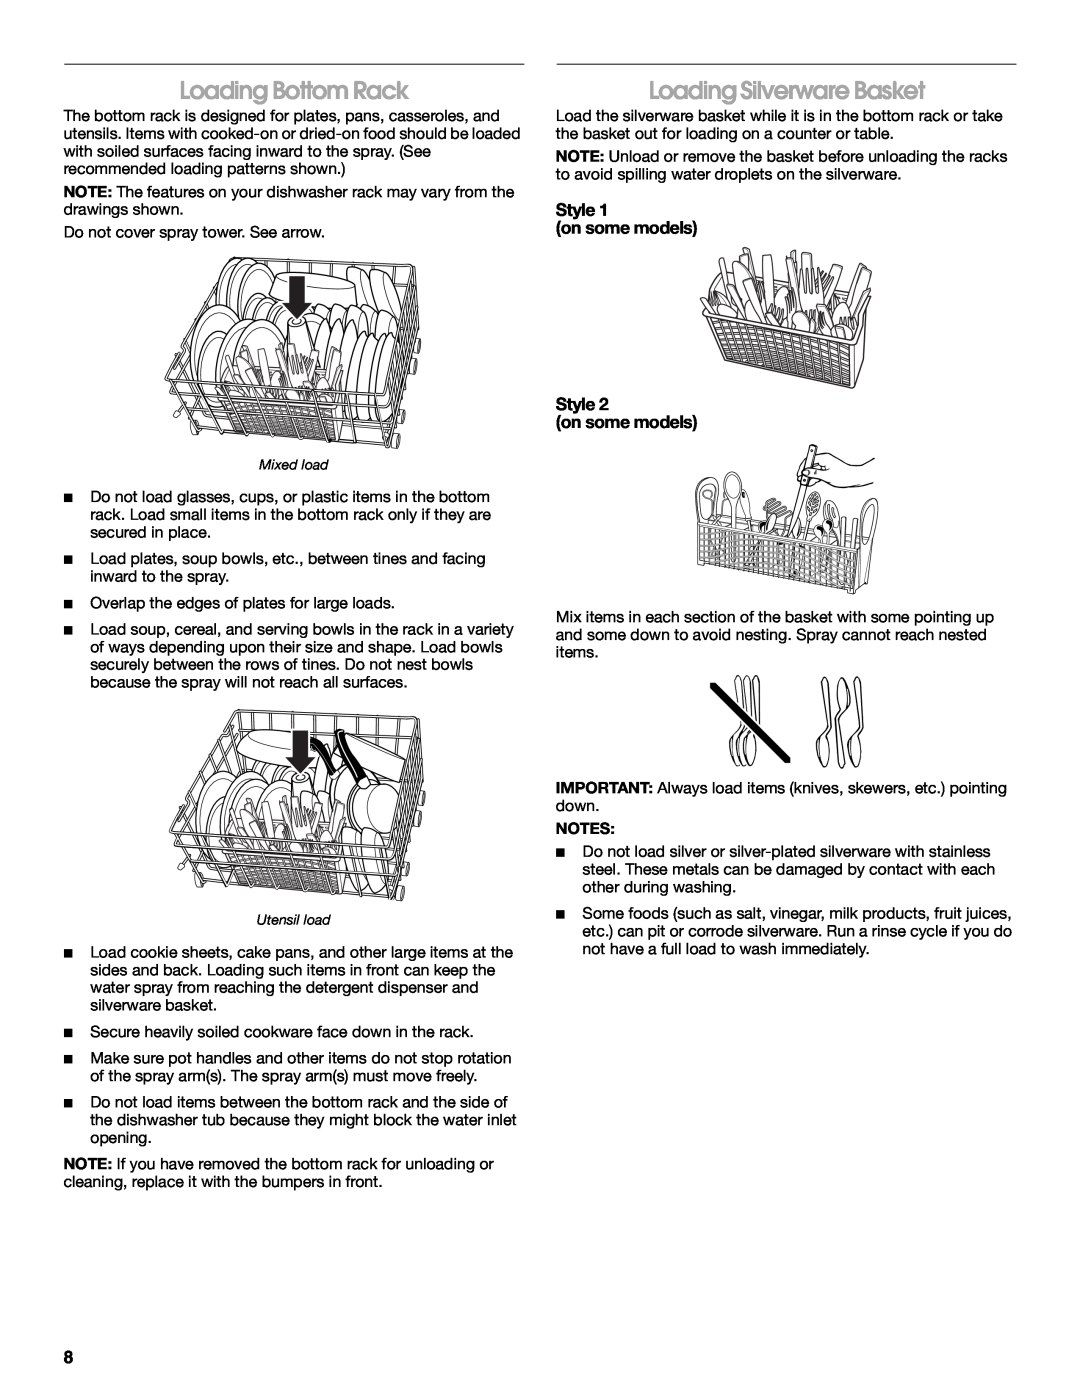 IKEA IUD4000S, IUD6000S manual Loading Bottom Rack, Loading Silverware Basket, Style on some models Style on some models 